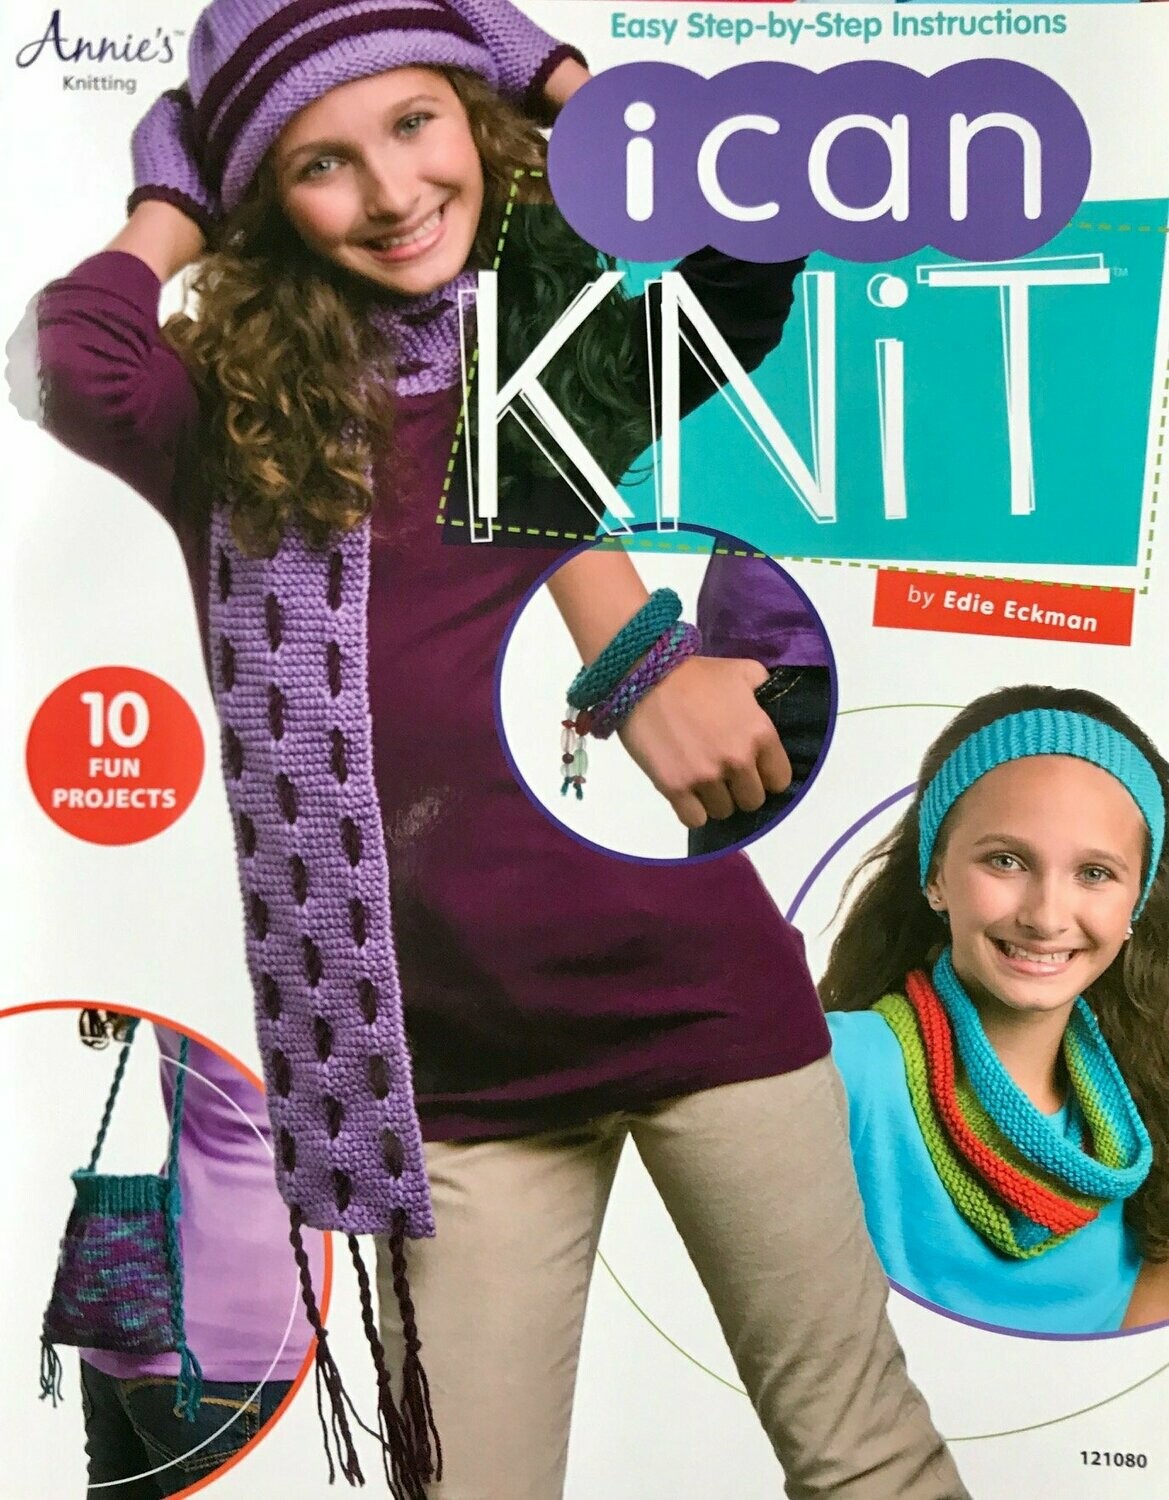 I can Knit. Knitting Project book. Fun wear